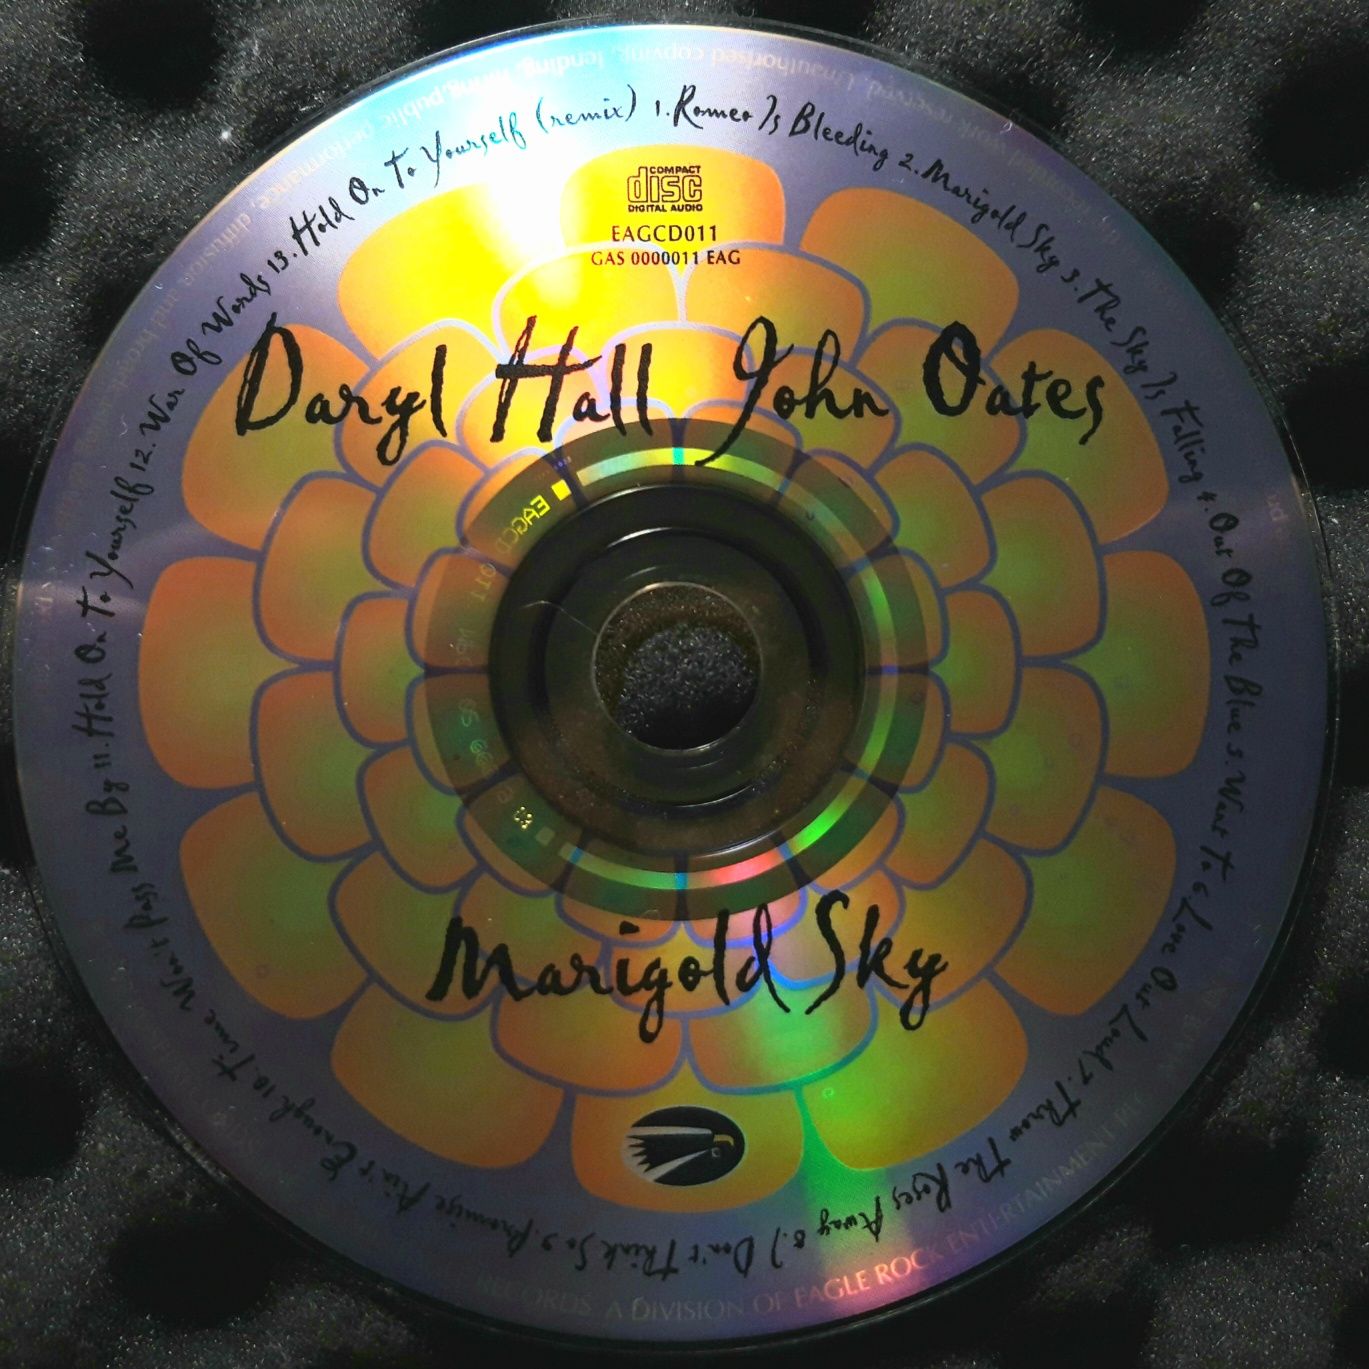 Daryl Hall John Oates – Marigold Sky (CD, 1997)